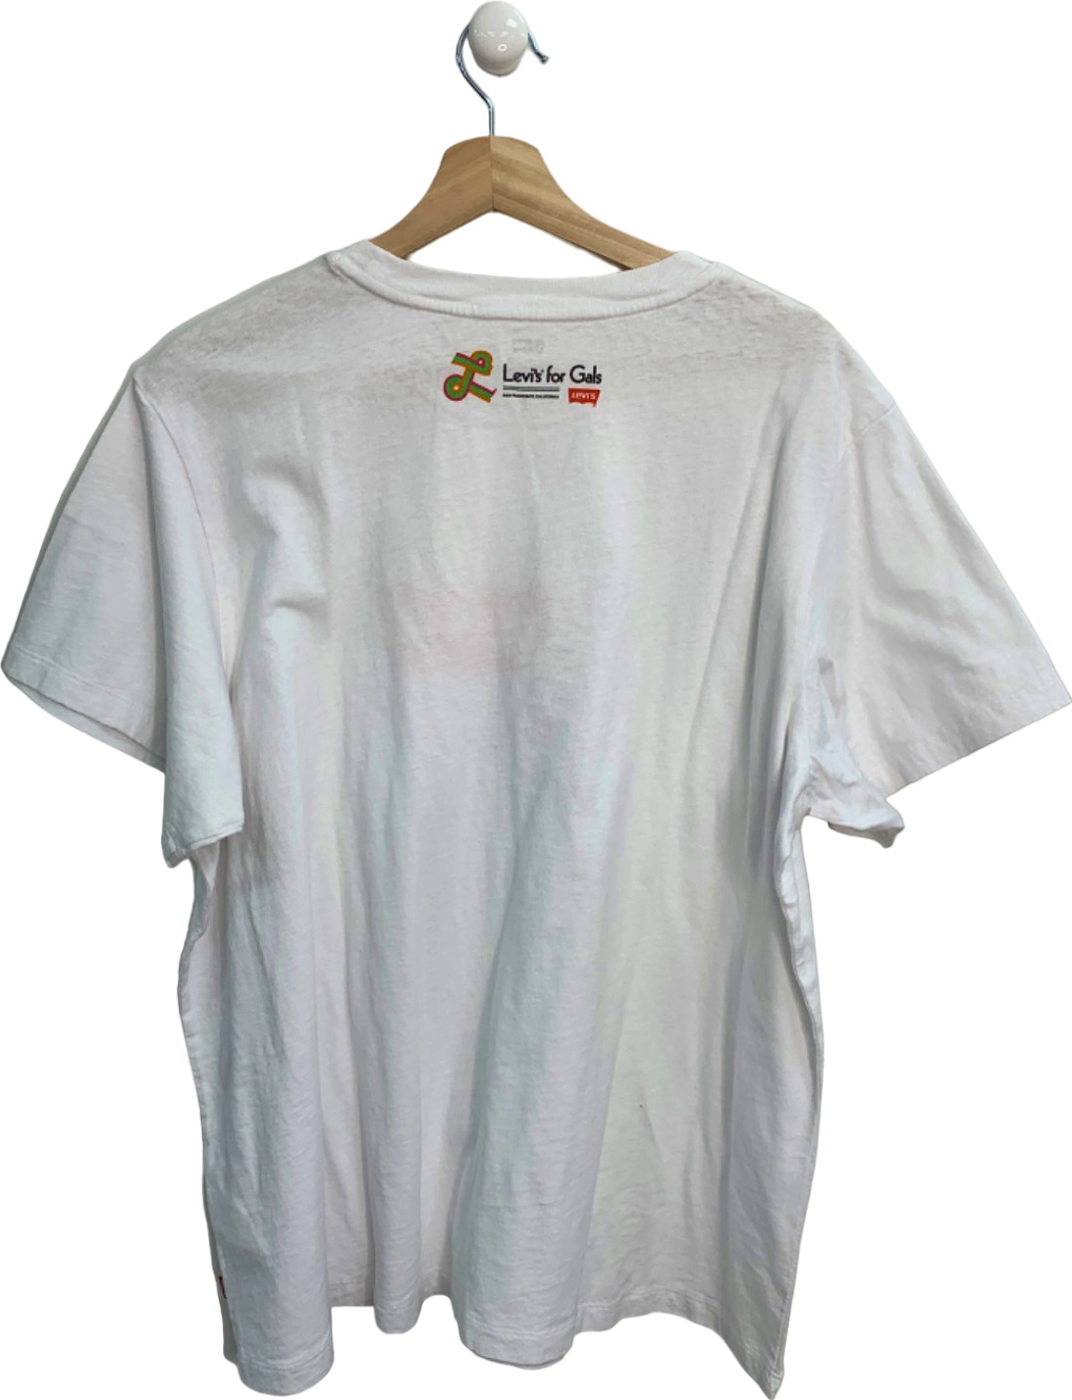 Levi's White Graphic T-Shirt with Cartoon Print XL